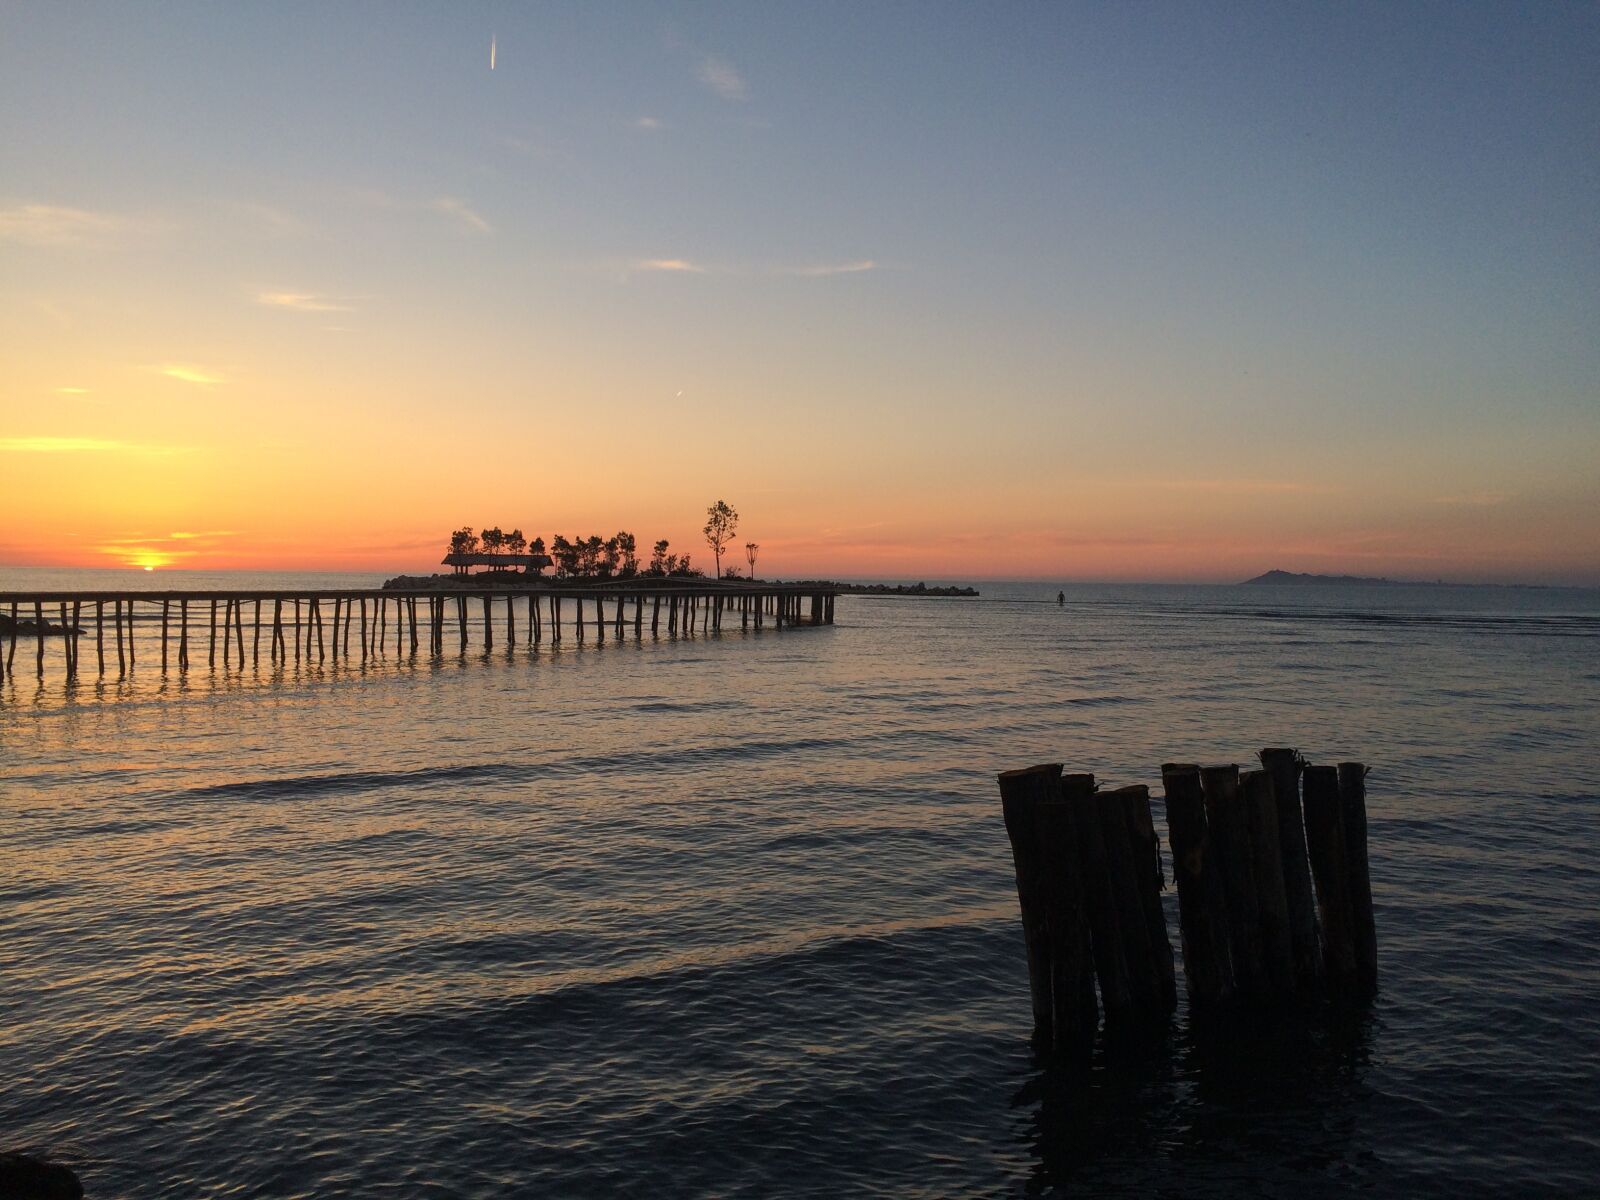 iPhone 5s back camera 4.15mm f/2.2 sample photo. Sunset, croatia, sea photography